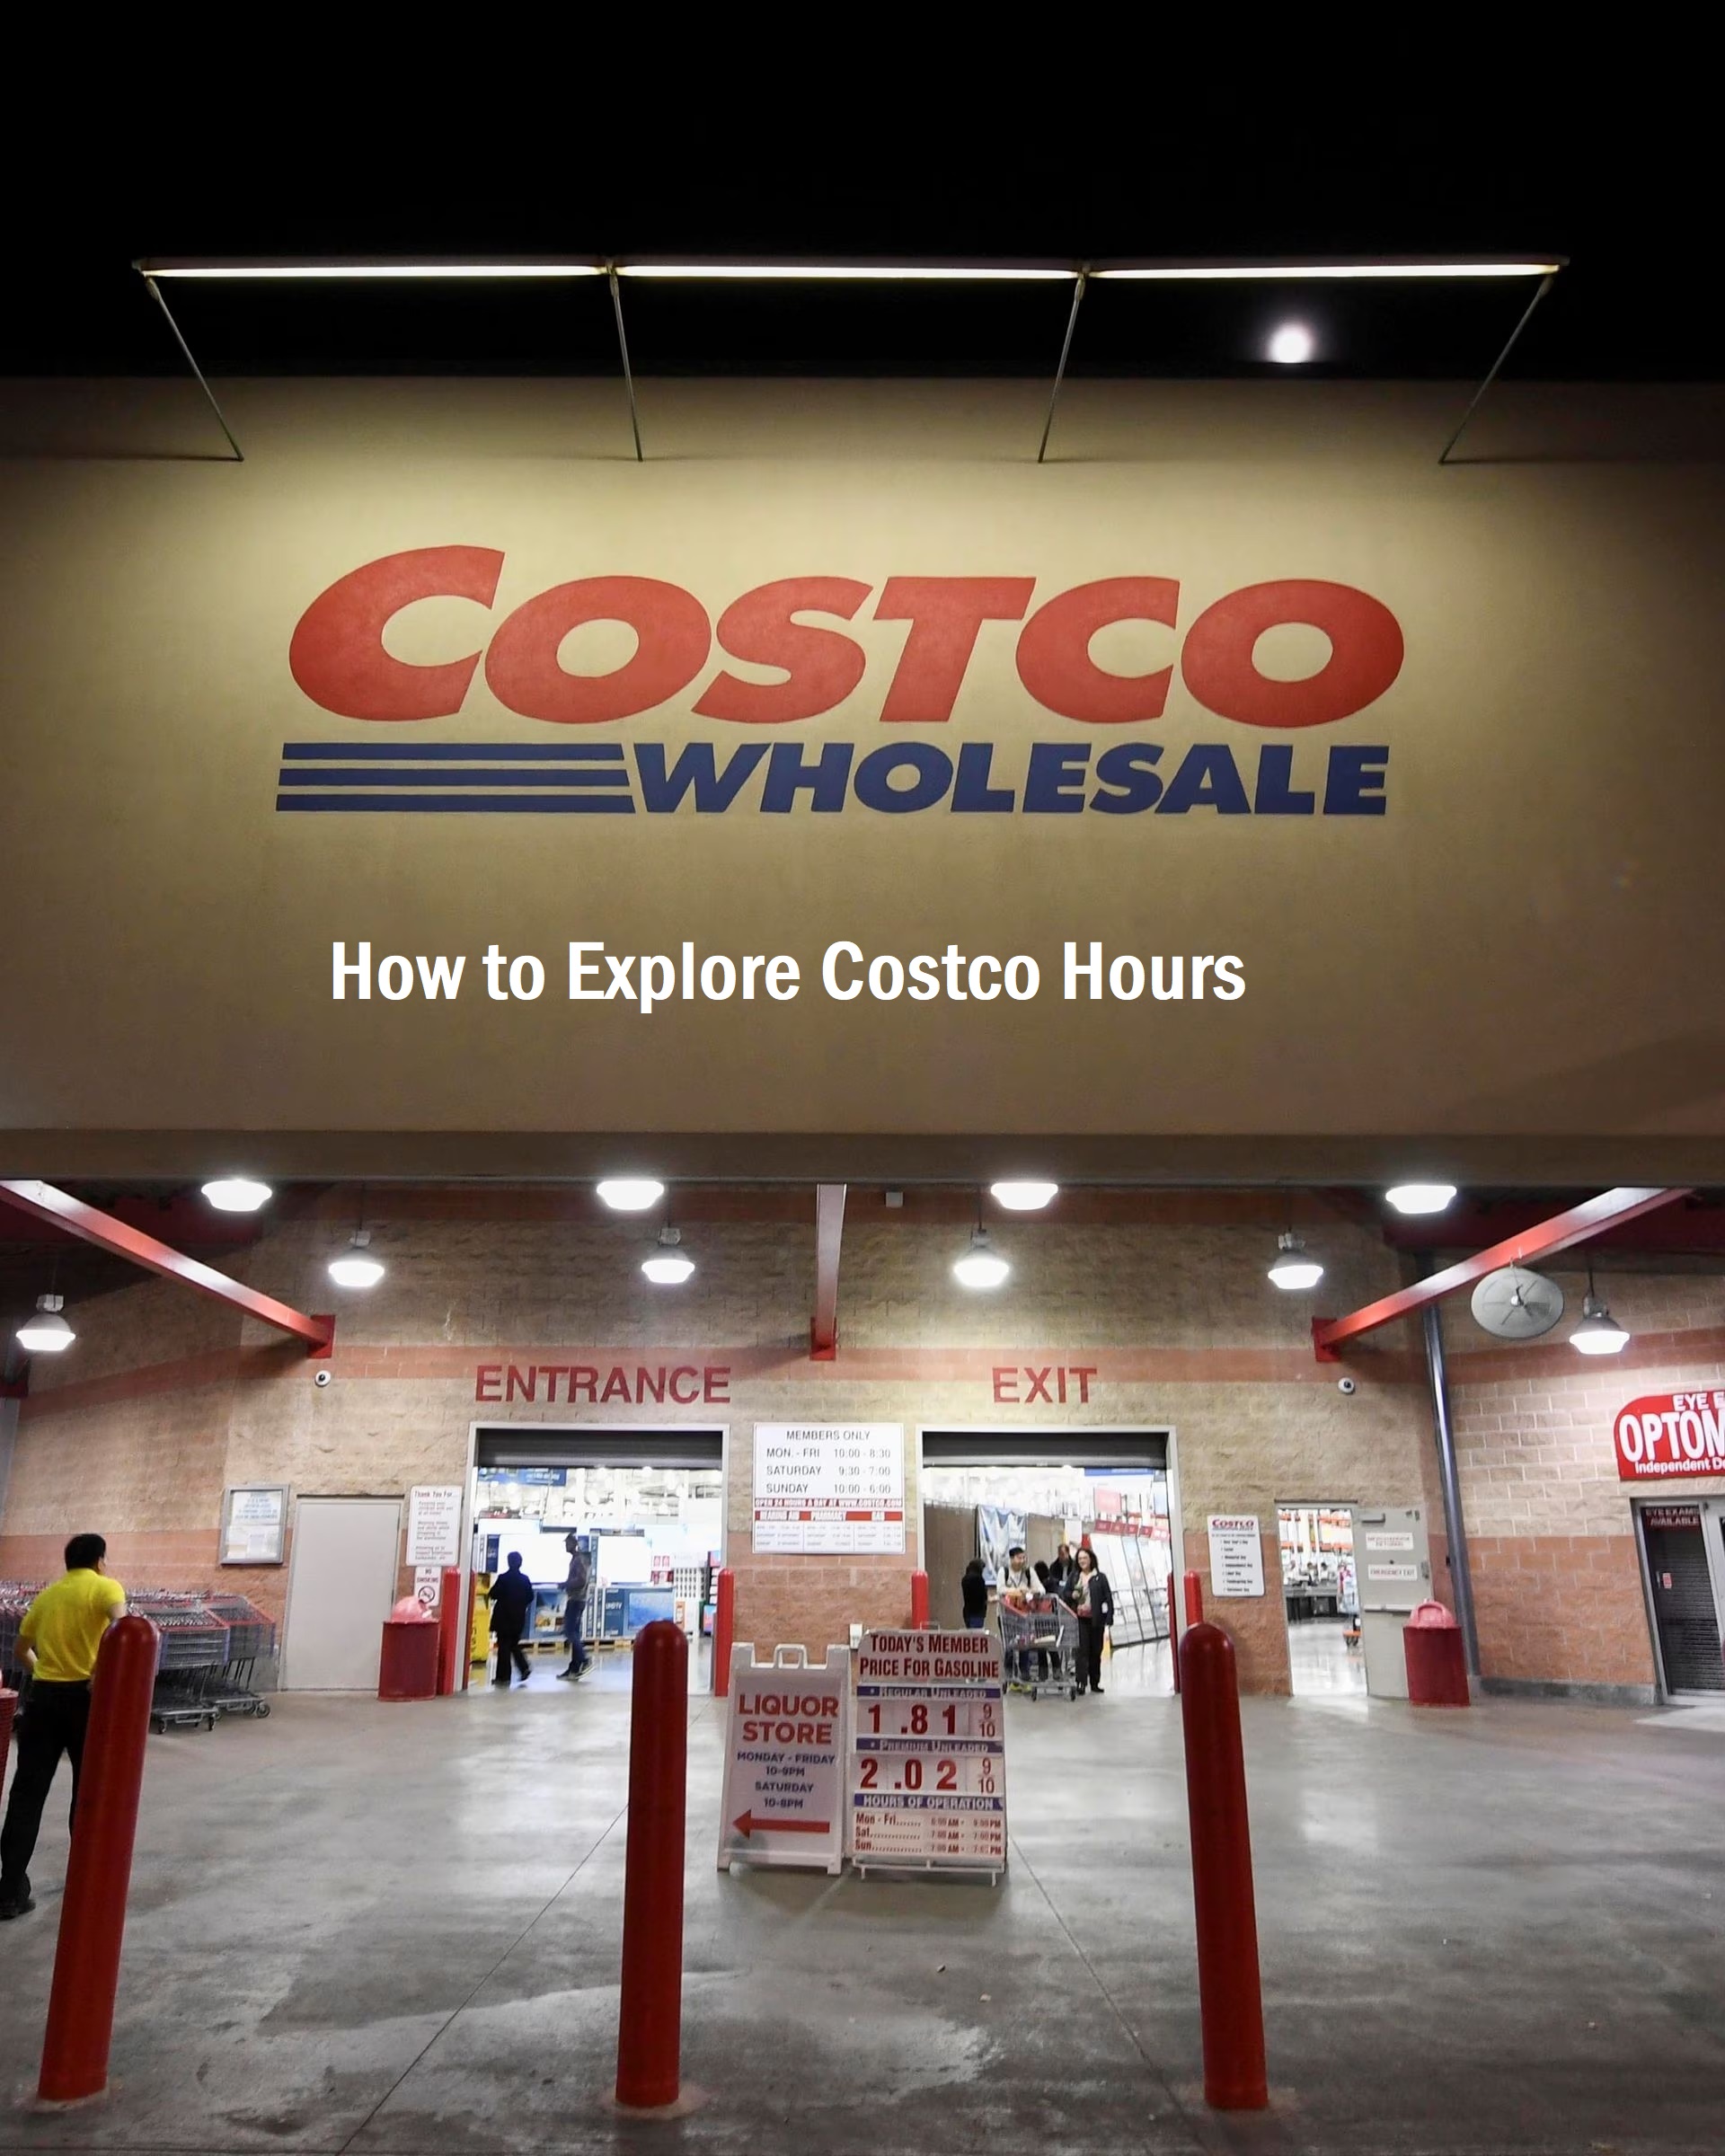 How to Explore Costco Hours